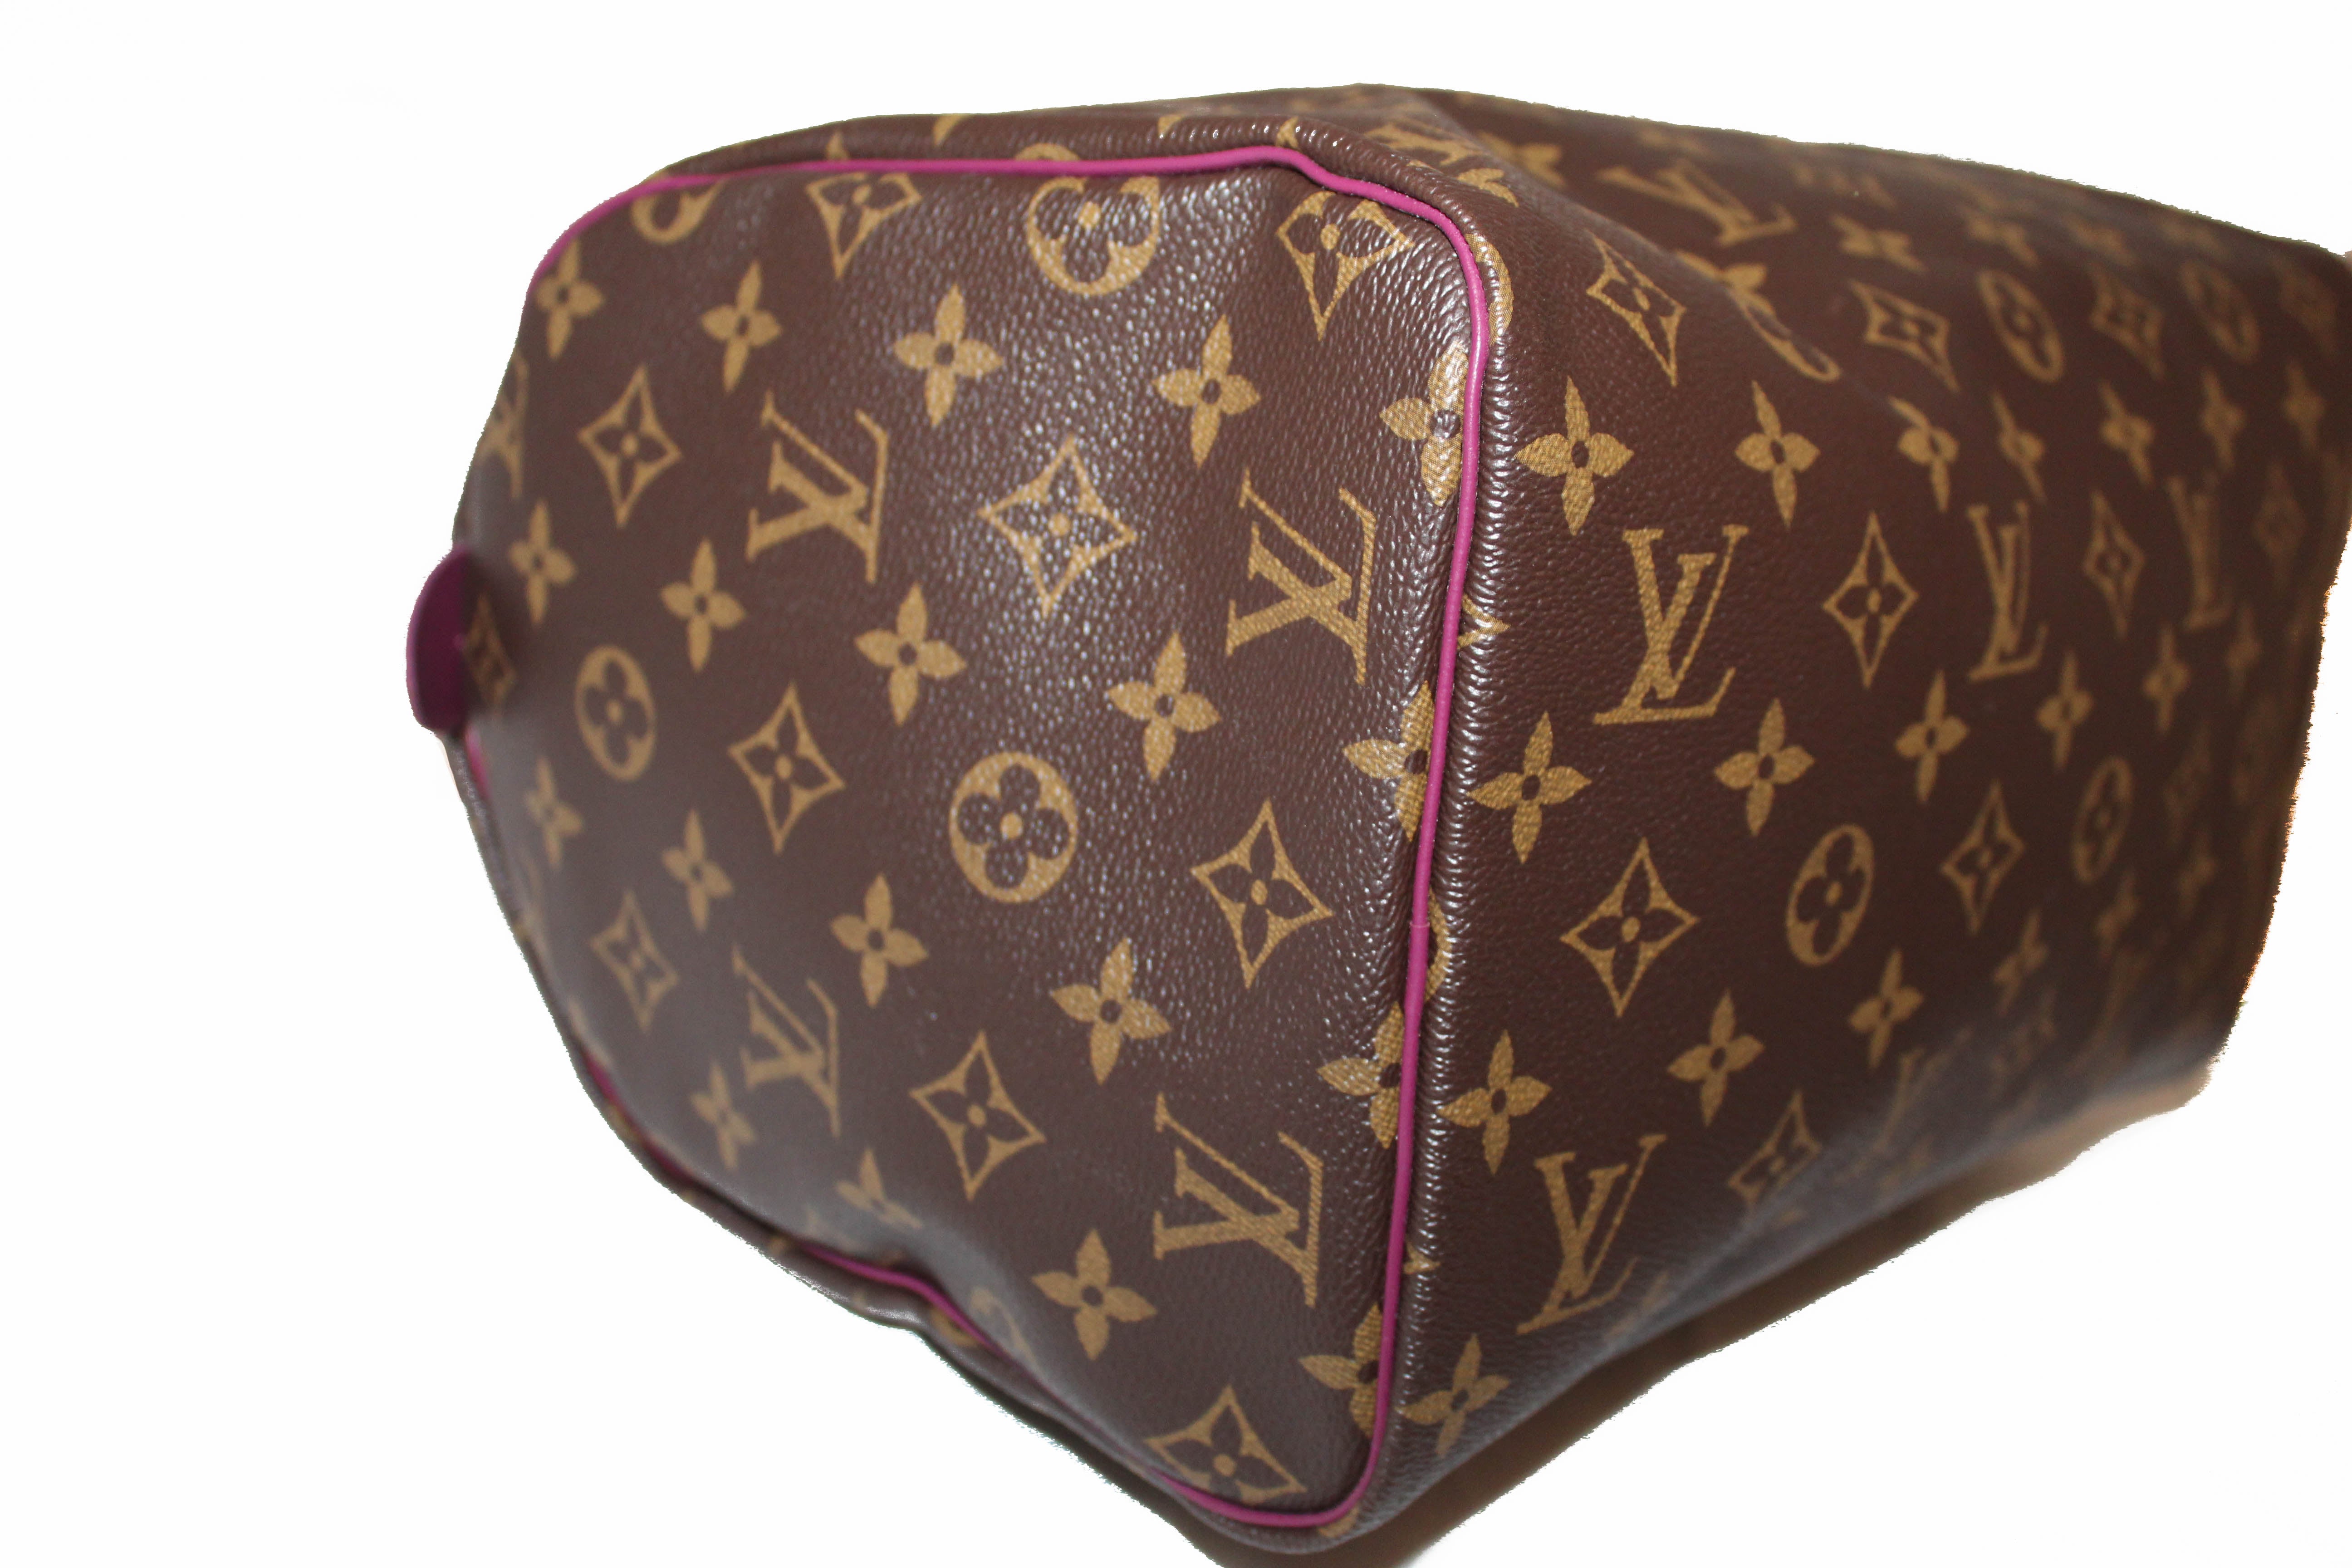 Authentic Louis Vuitton Limited Edition Totem Monogram Canvas Speedy 30 Handbag